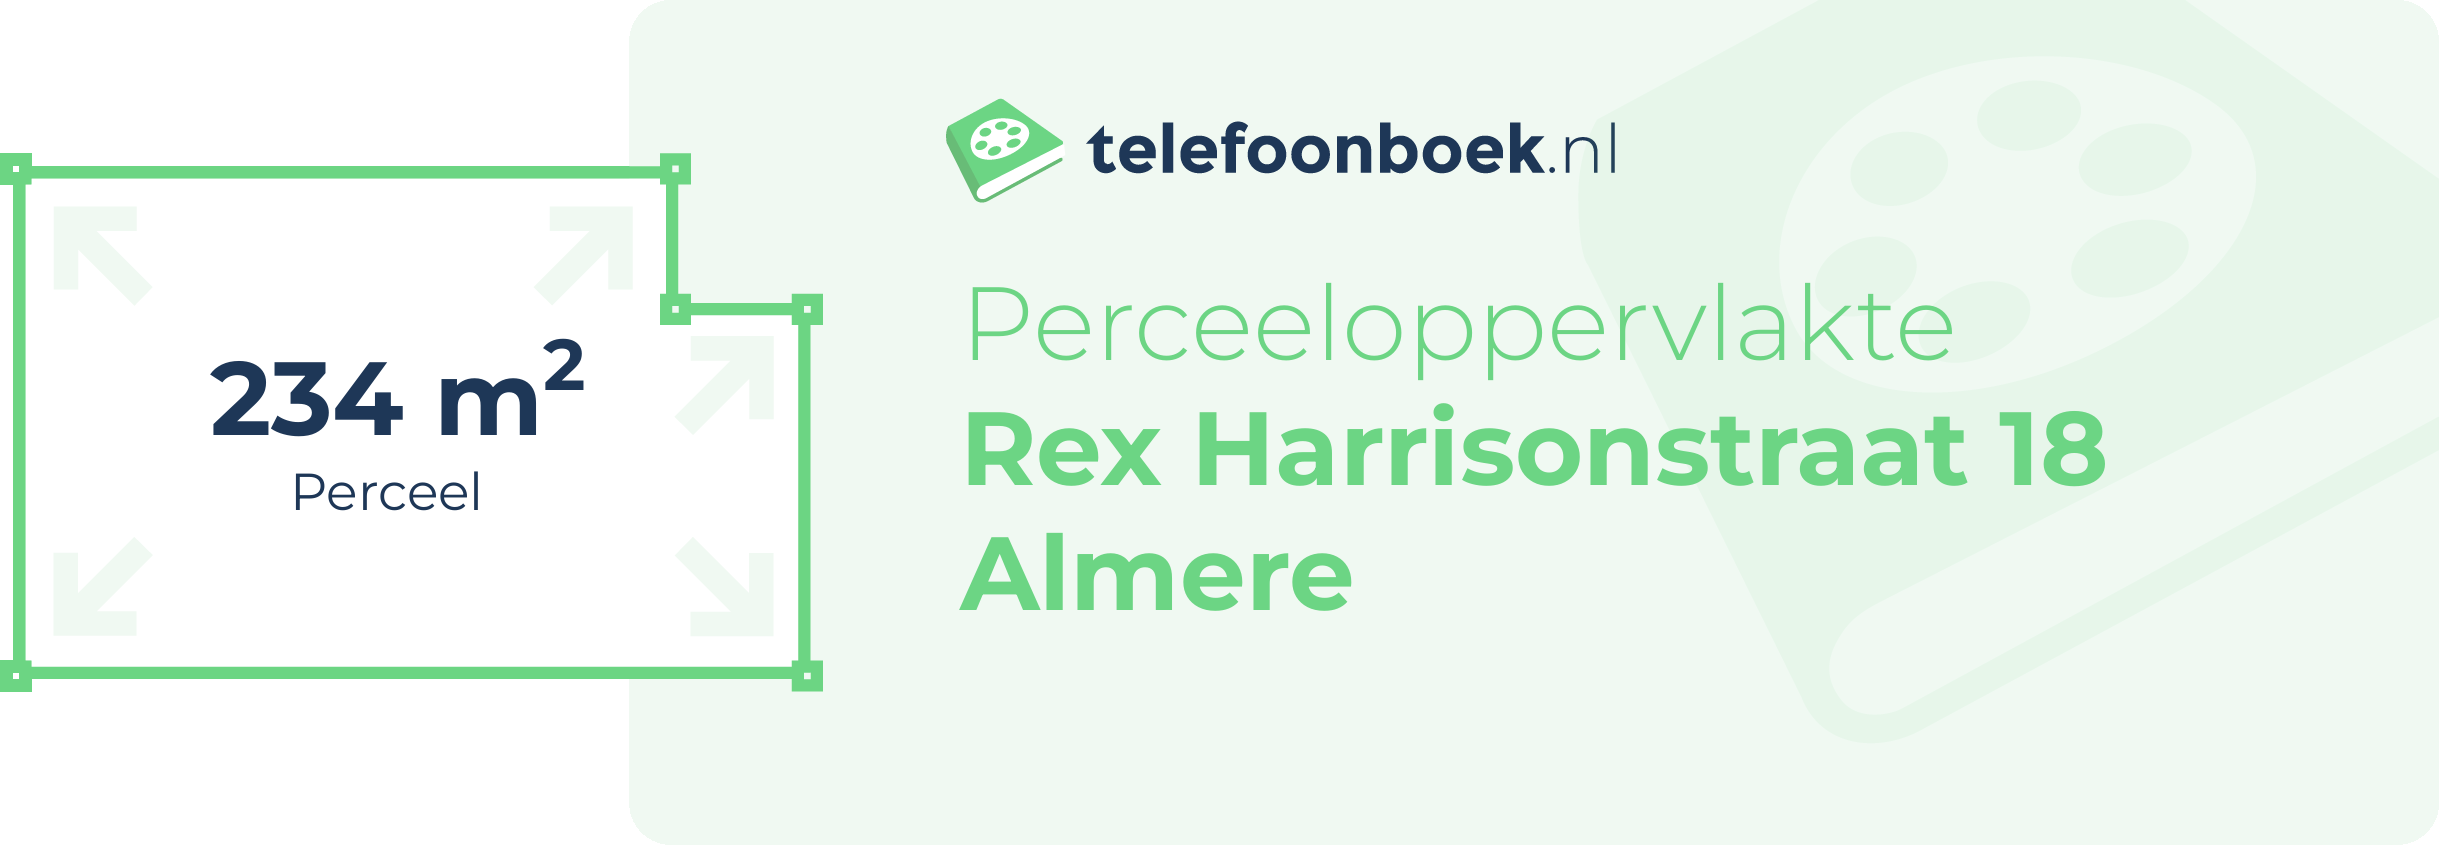 Perceeloppervlakte Rex Harrisonstraat 18 Almere